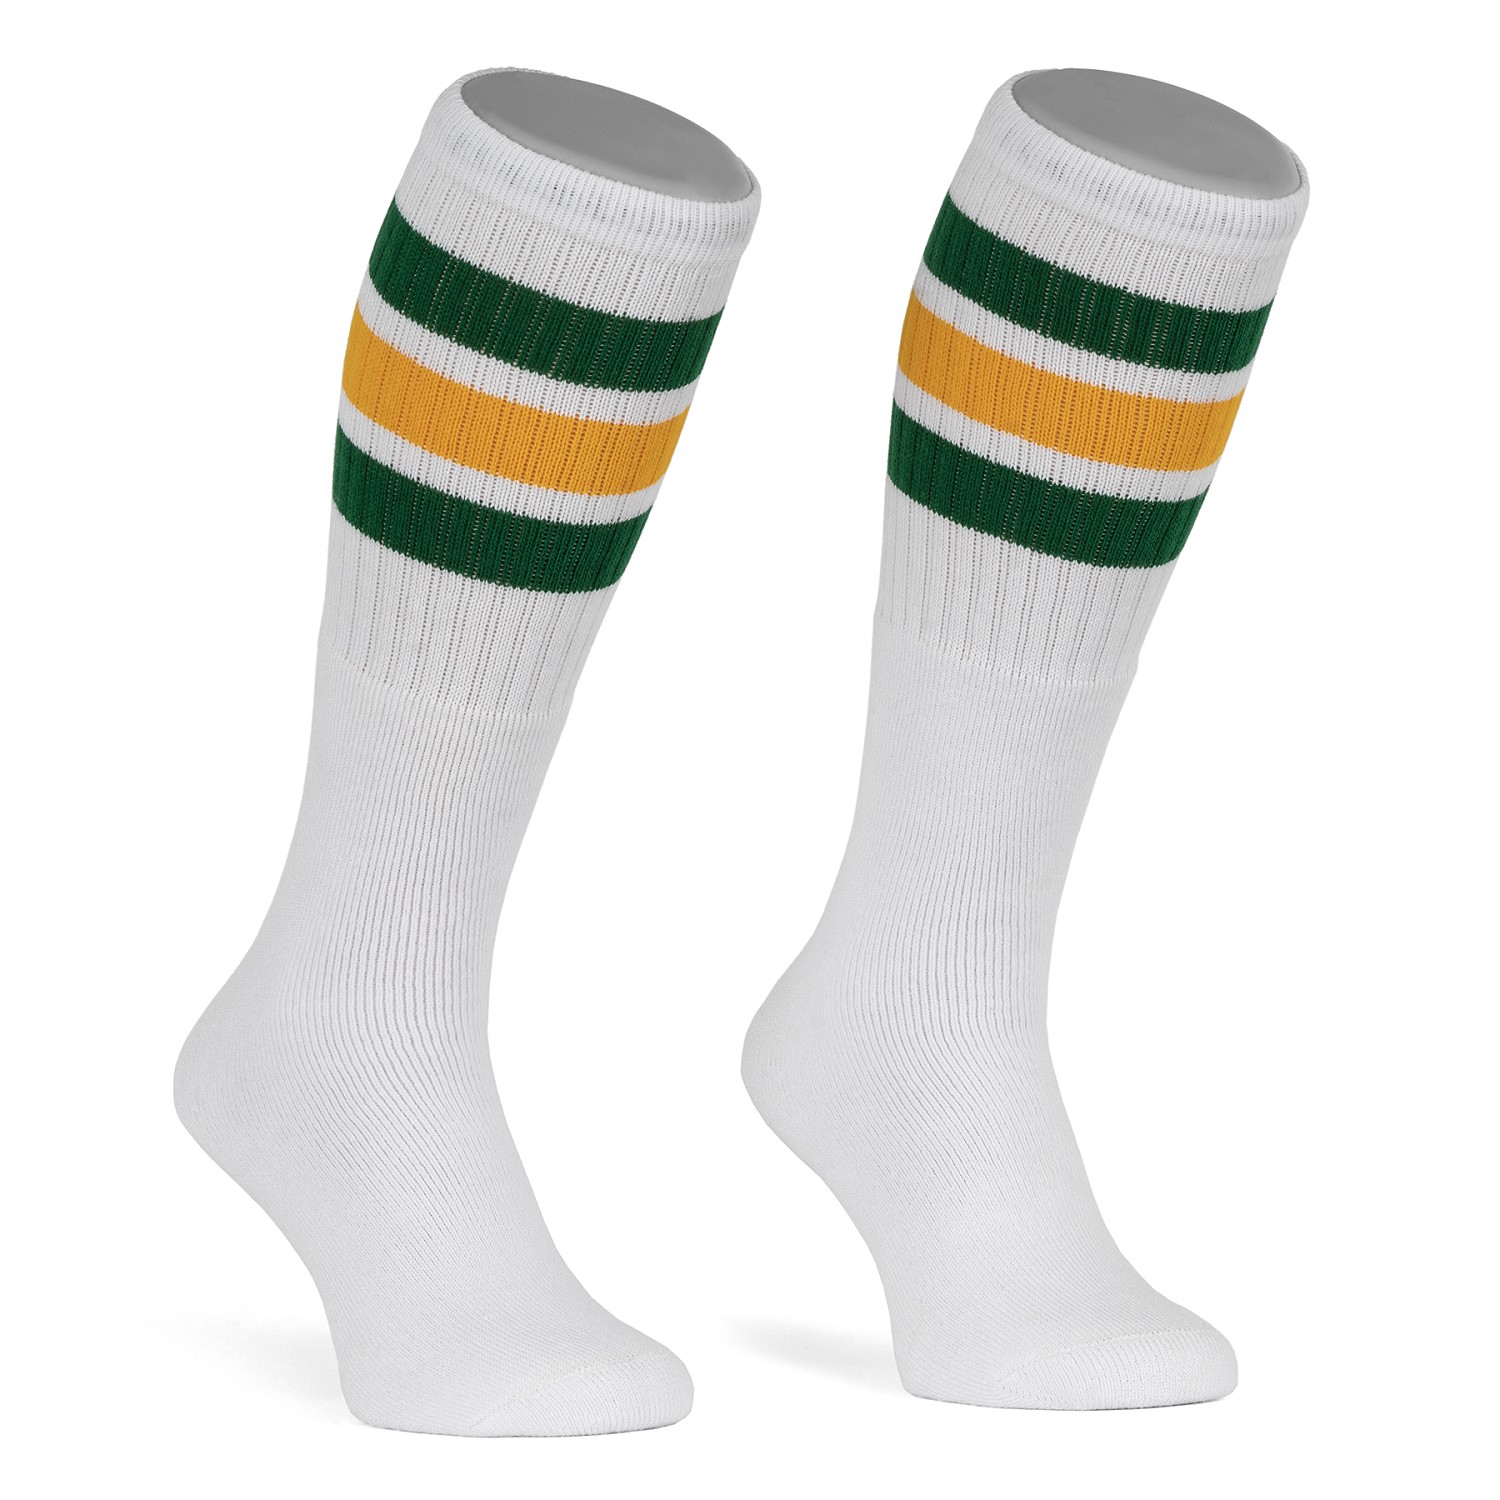 Skatersocks Socken 22 Inch Tube Socks Kniestrümpfe weiß grün gelb gestreift